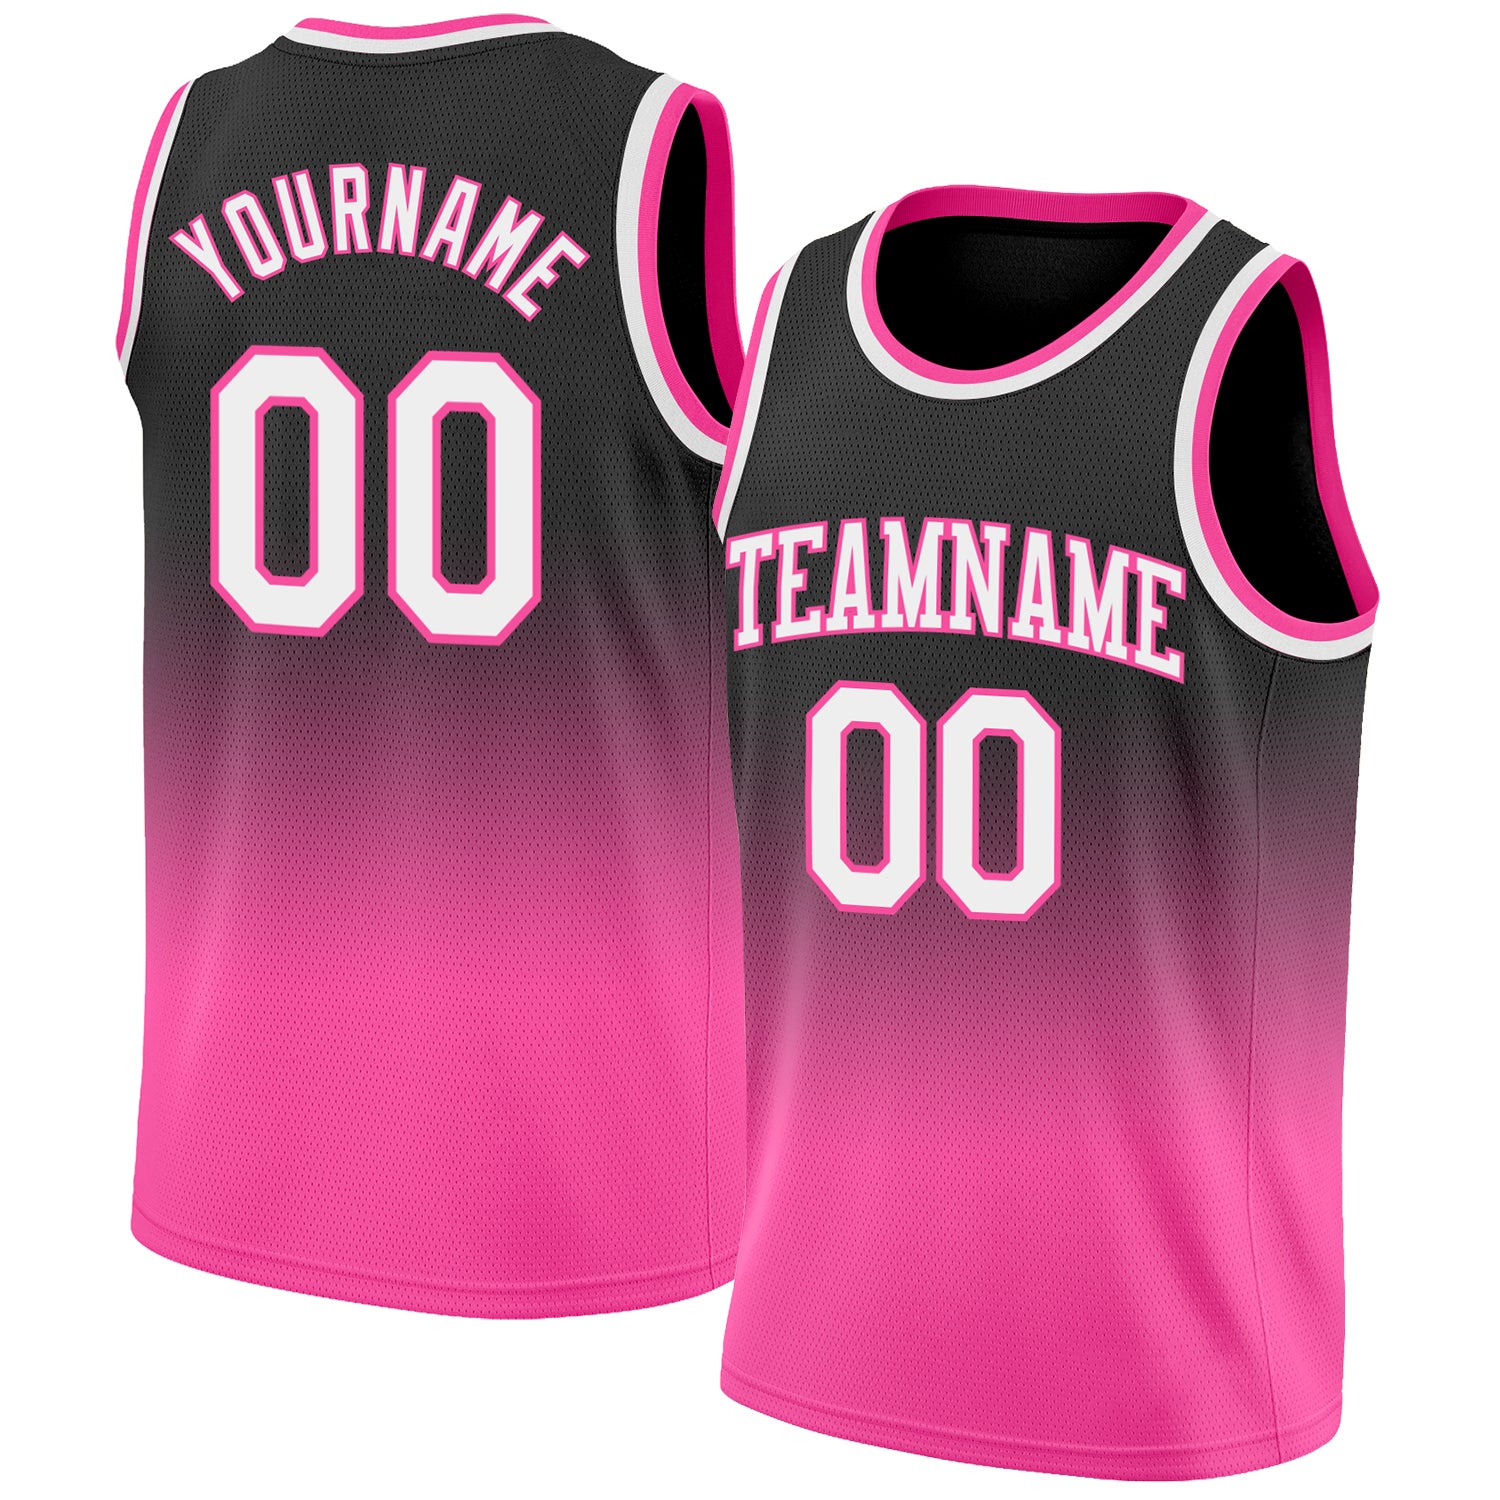 design pink basketball jersey